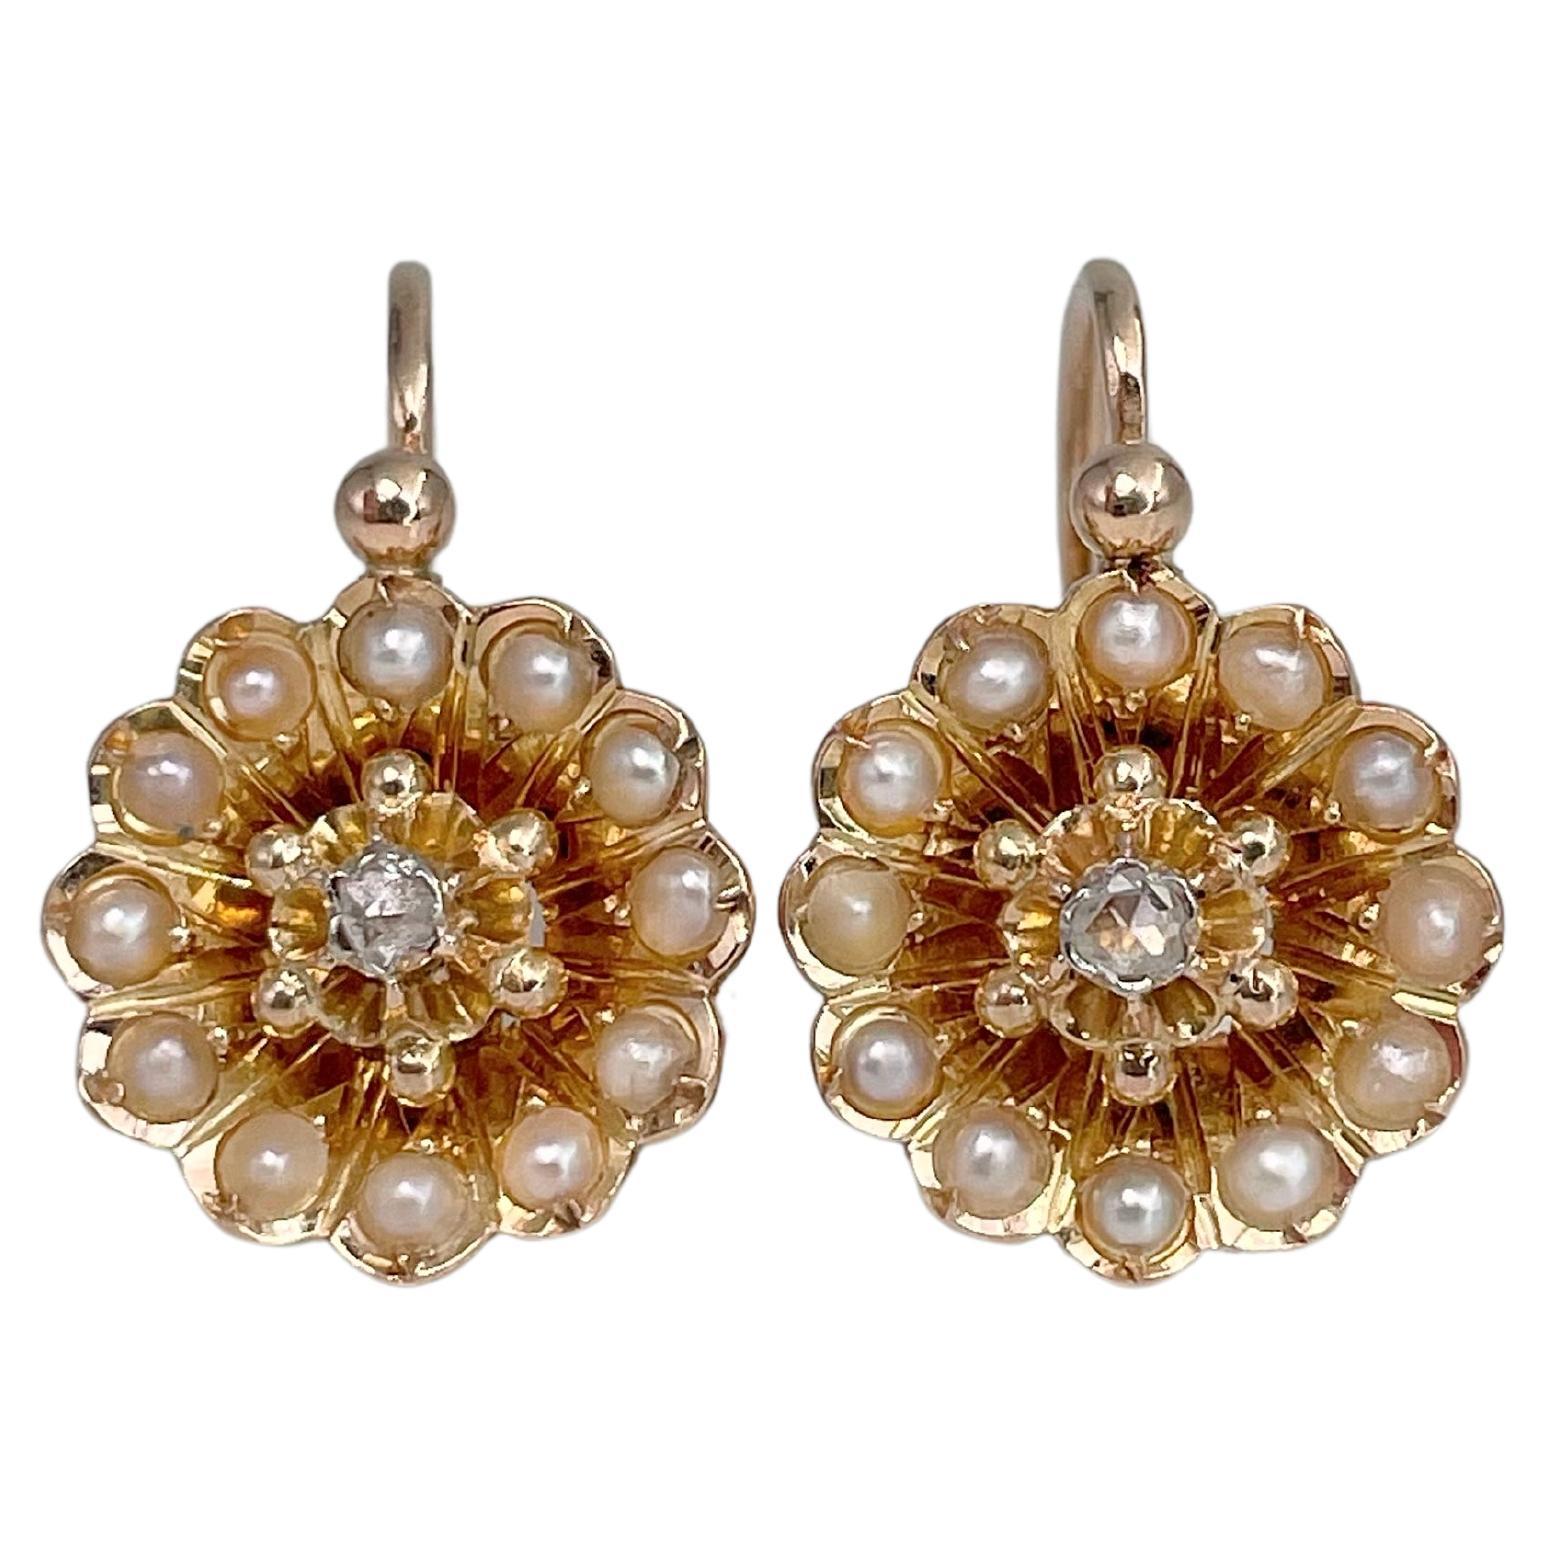 Victorian 18 Karat Gold Rose Cut Diamond Pearl Front Fastening Cluster Earrings